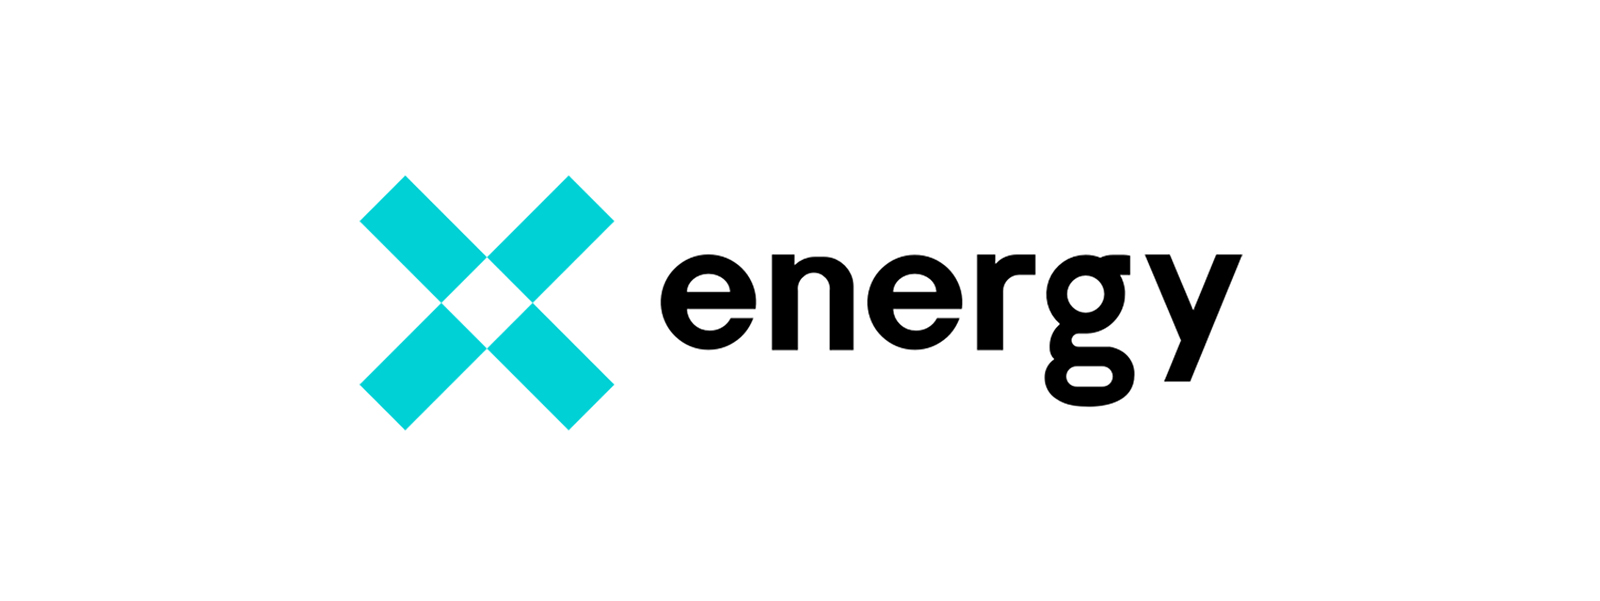 logos-x-energy